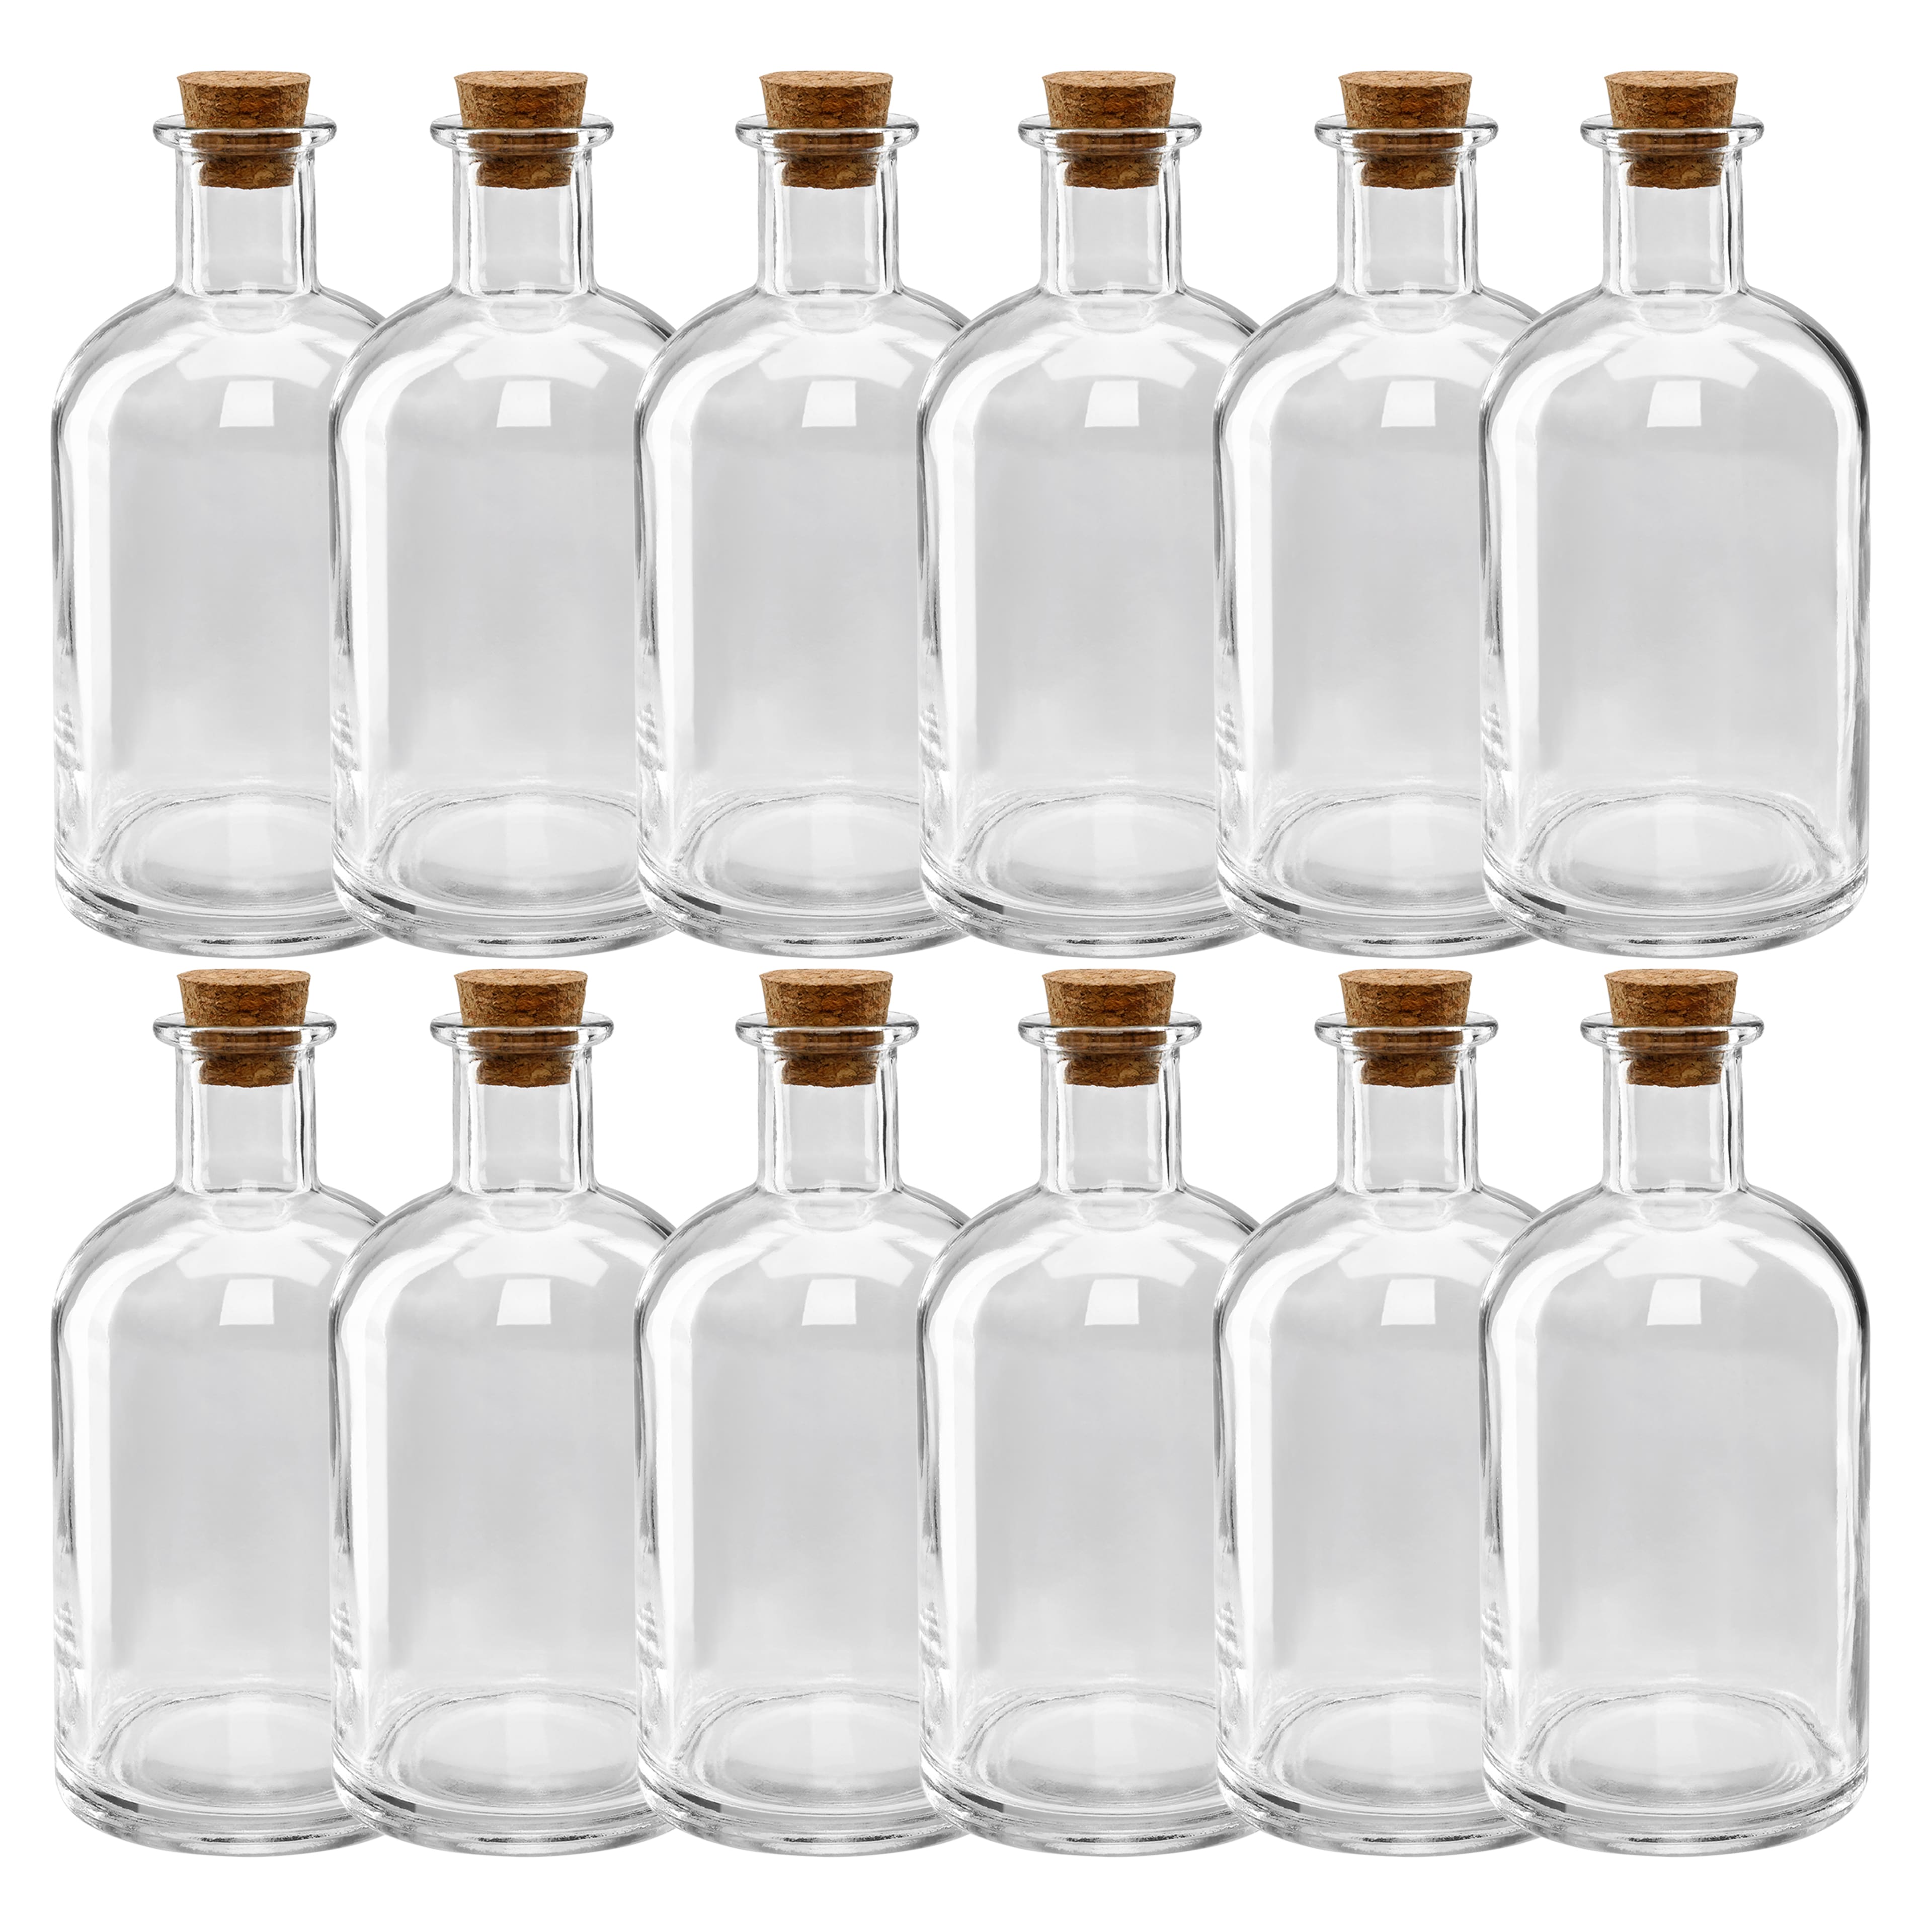 Ashland® Glass Milk Bottles with Lids, 6 Pack